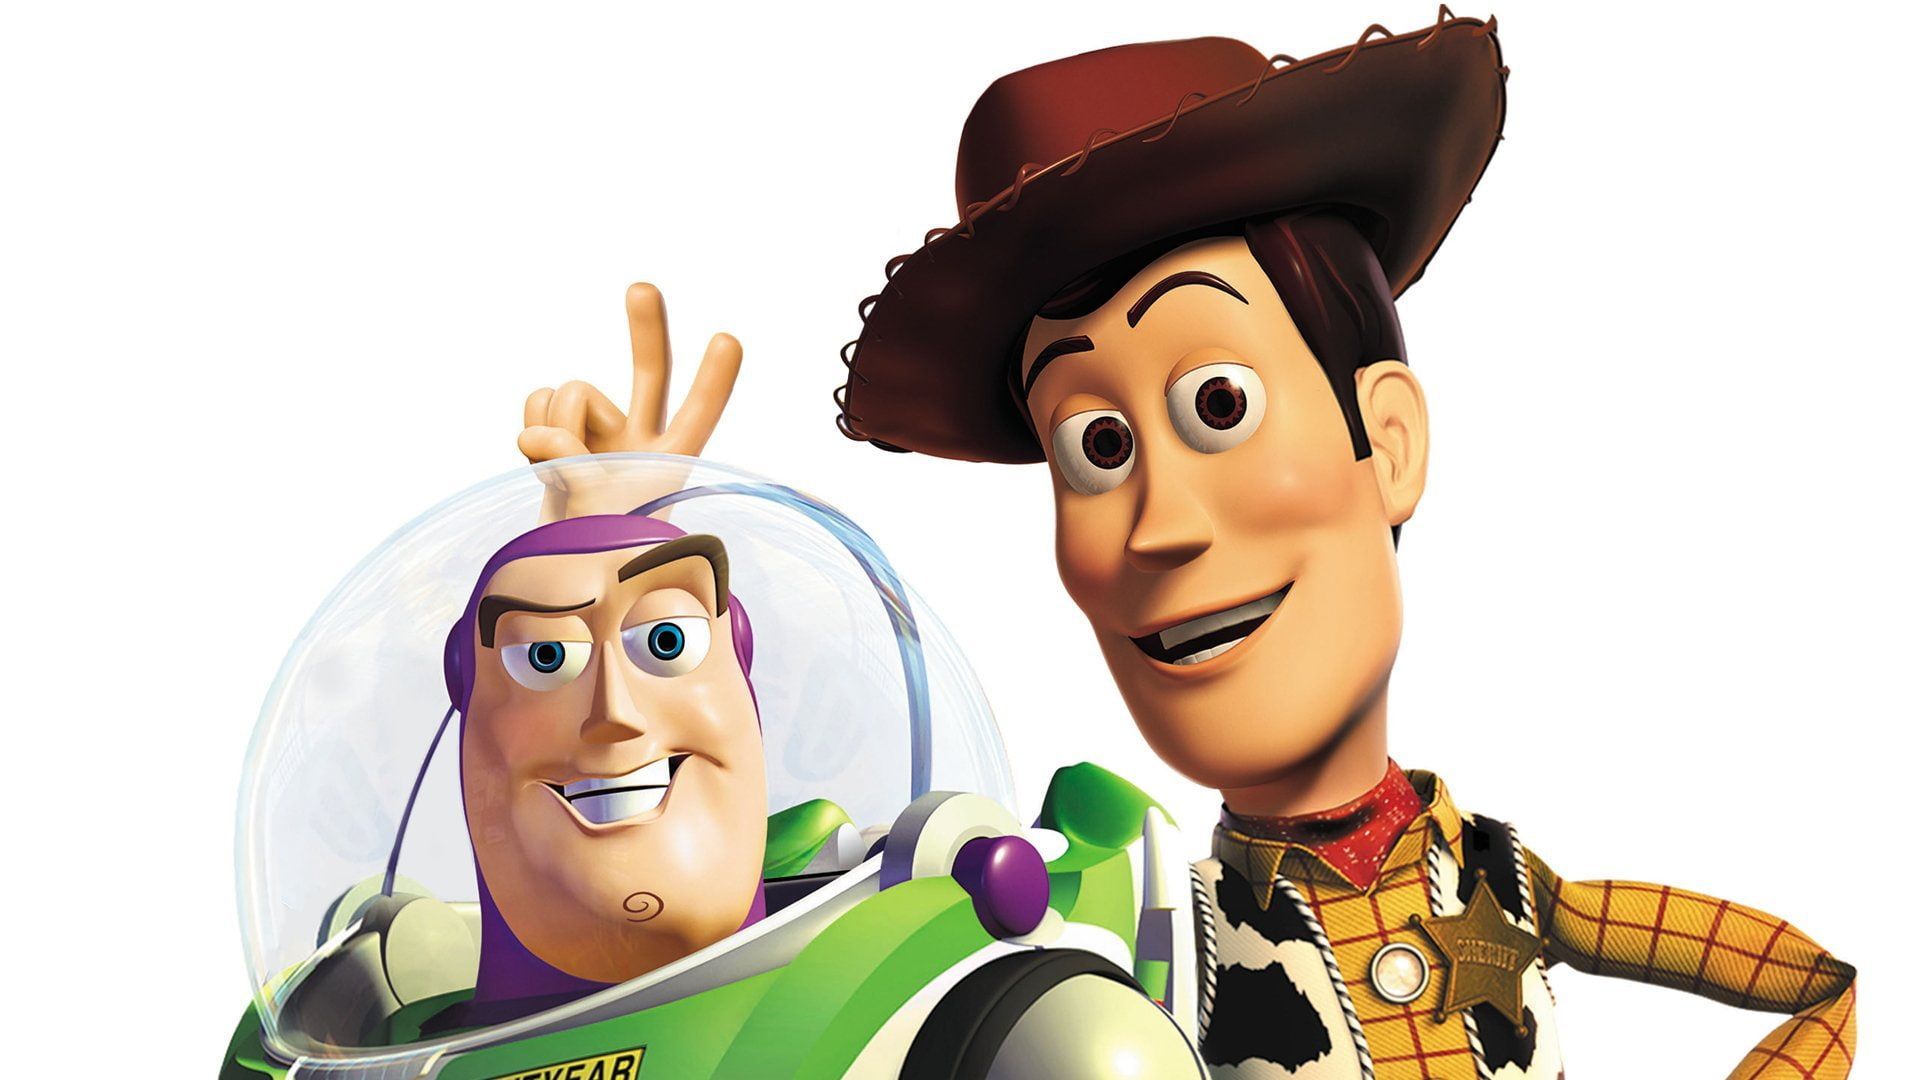 Toy Story Toy Story 2 Buzz Lightyear Woody (Toy Story) P